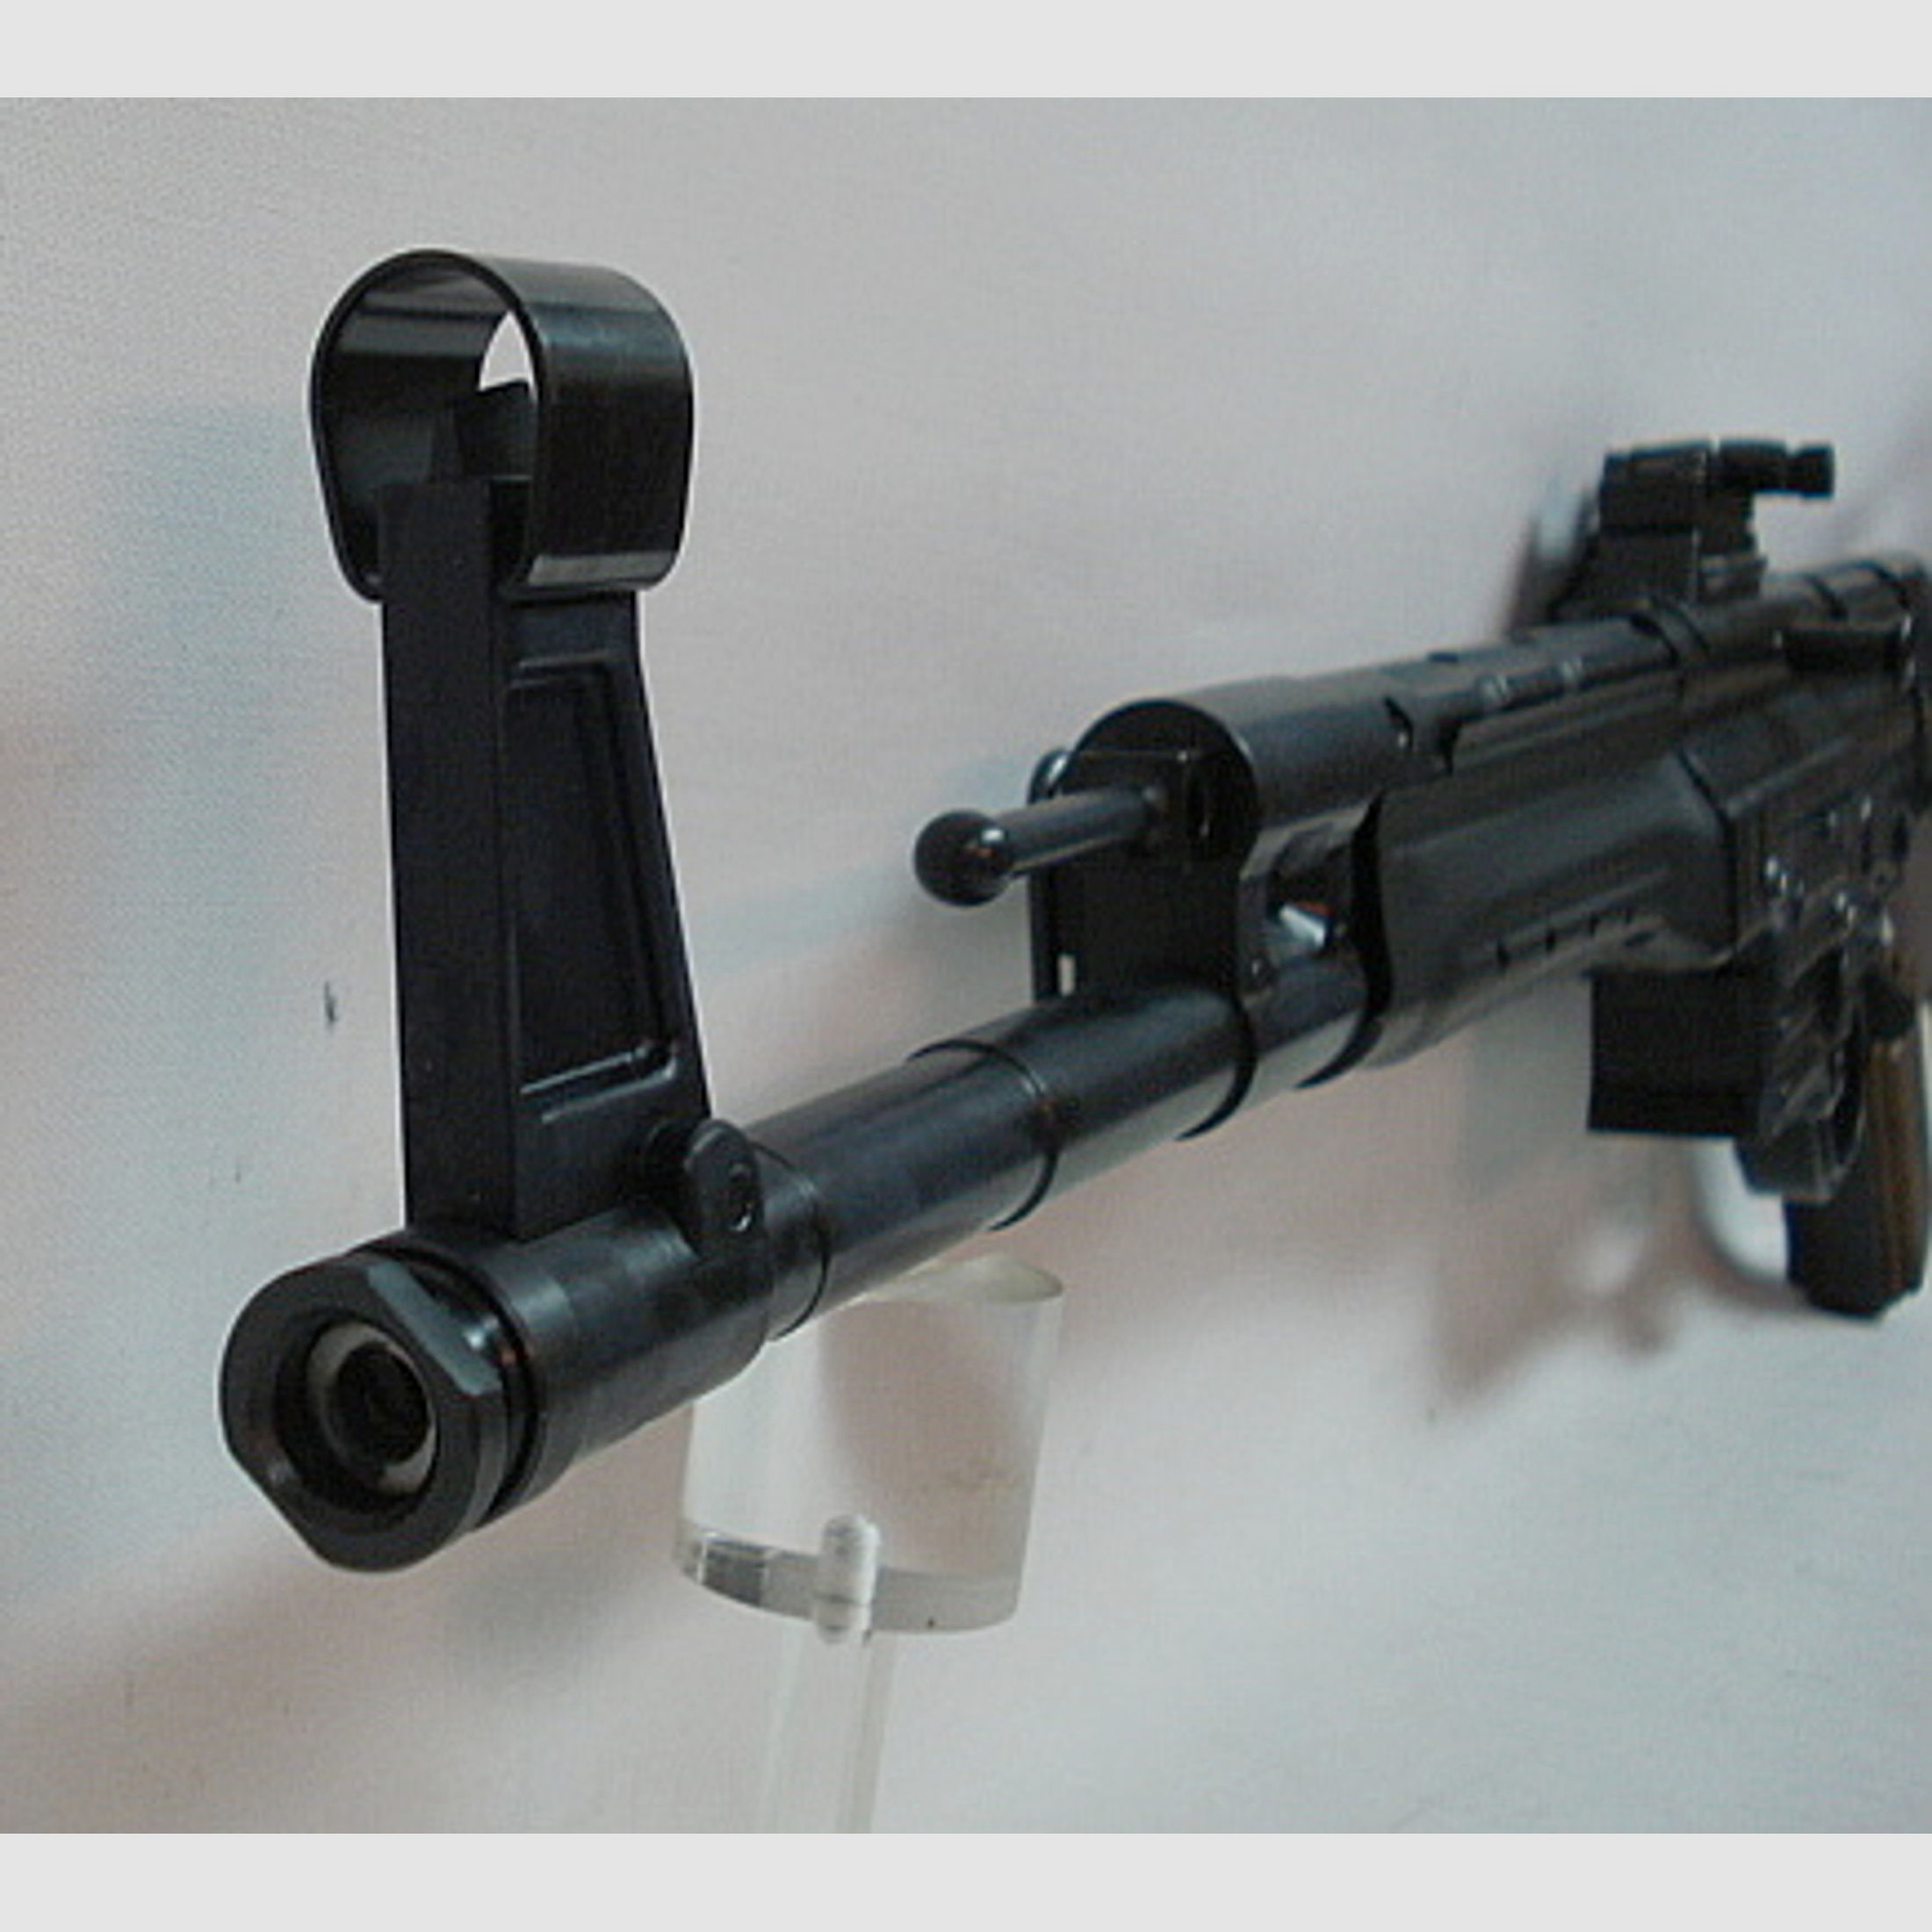 GSG StG44 Kal.9mm P.A.K. -